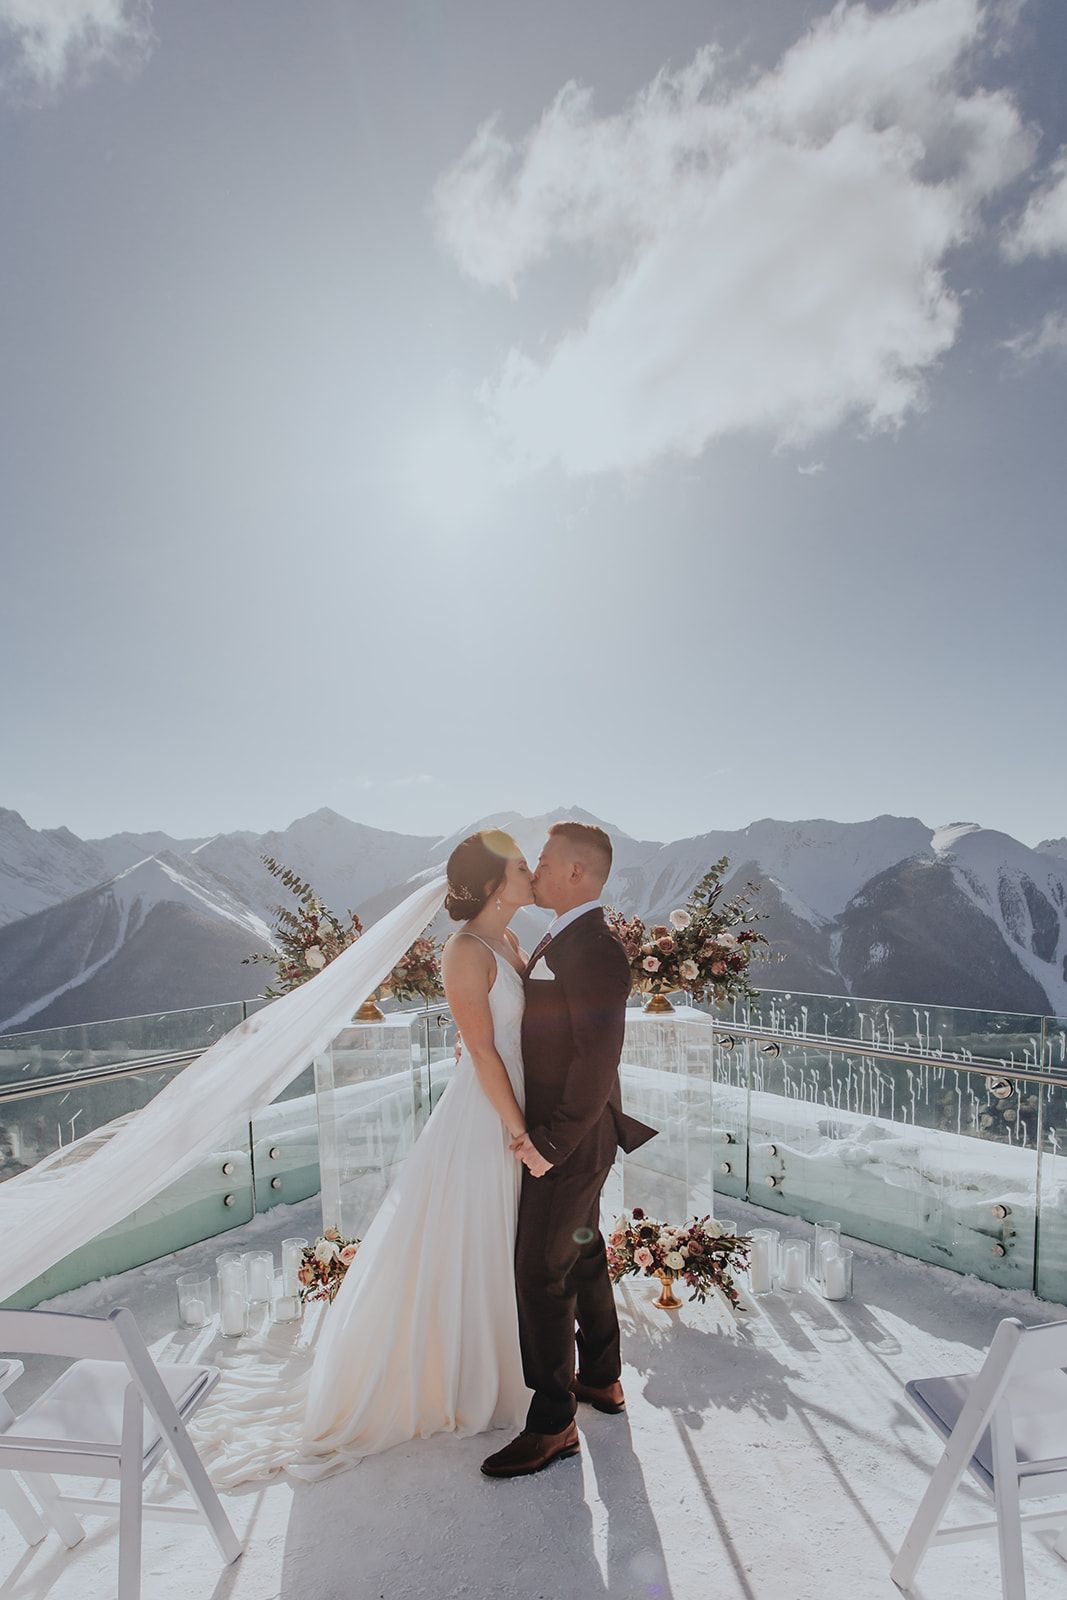 Sky Bistro Banff Wedding - Featured on Bronte Bride, rooftop ceremony